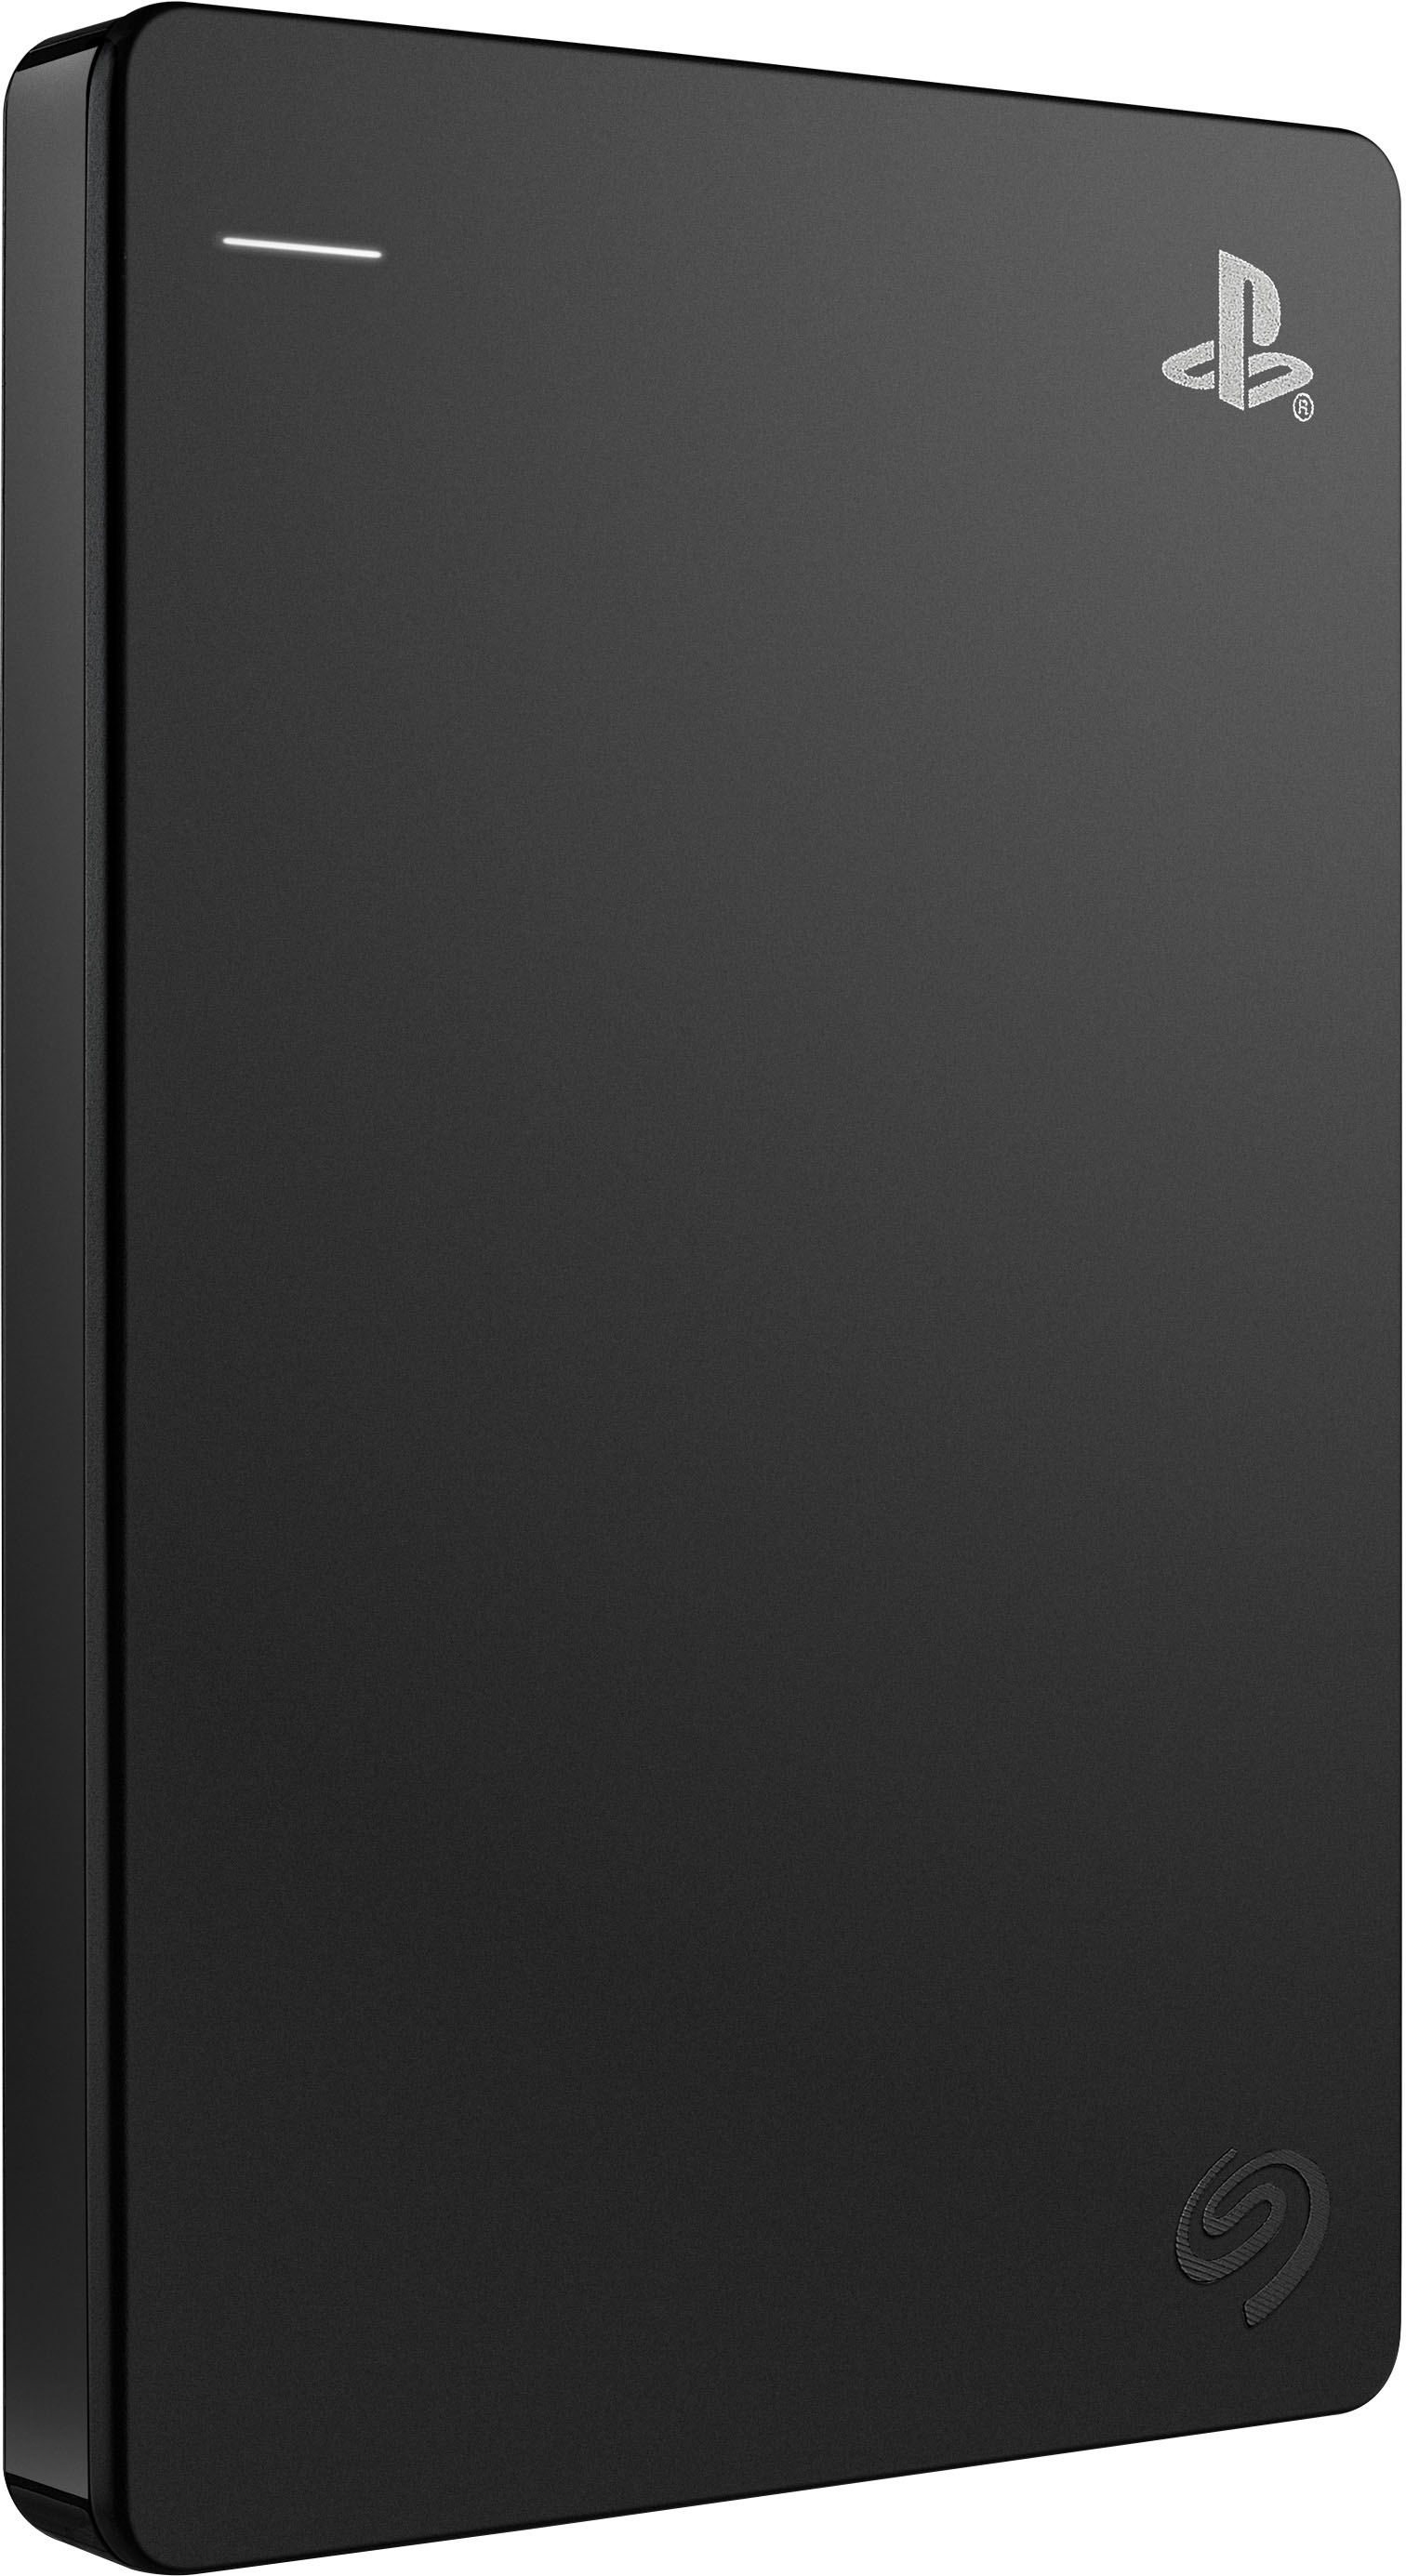 Left View: PNY - CS900 240GB Internal SSD SATA